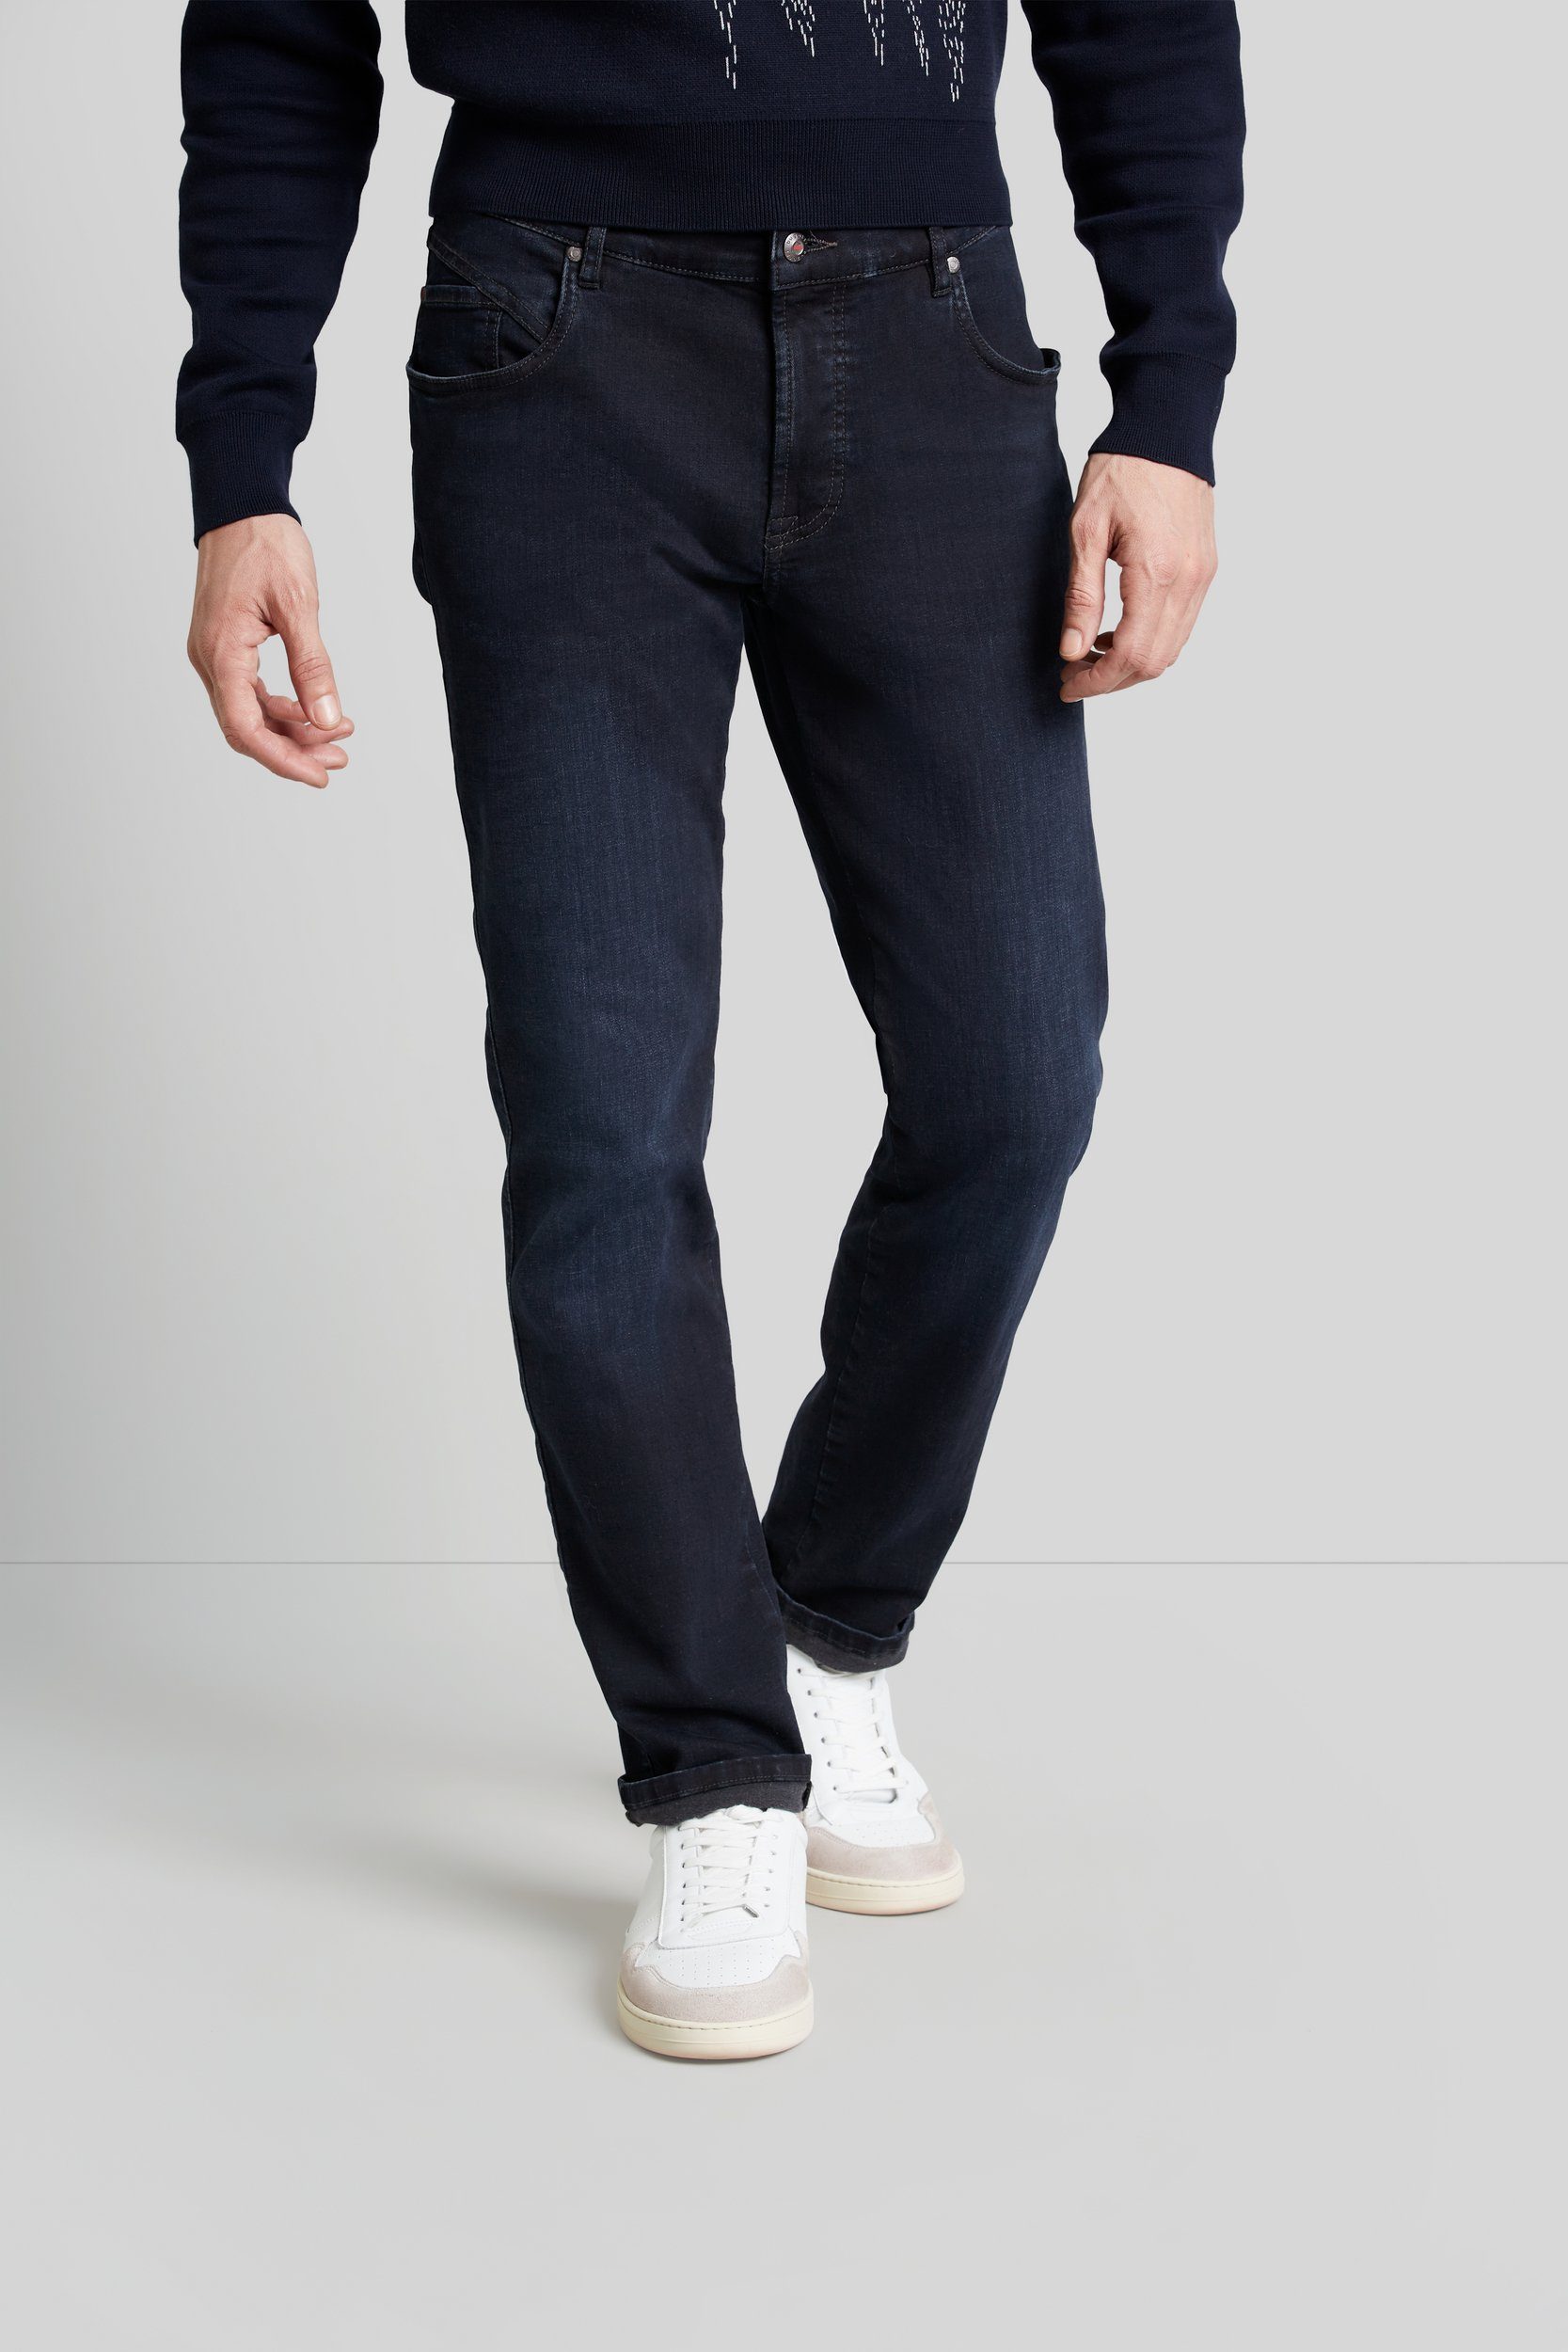 bugatti 5-Pocket-Jeans Flexcity Denim mit hohem Tragekomfort dunkelblau | Jeans